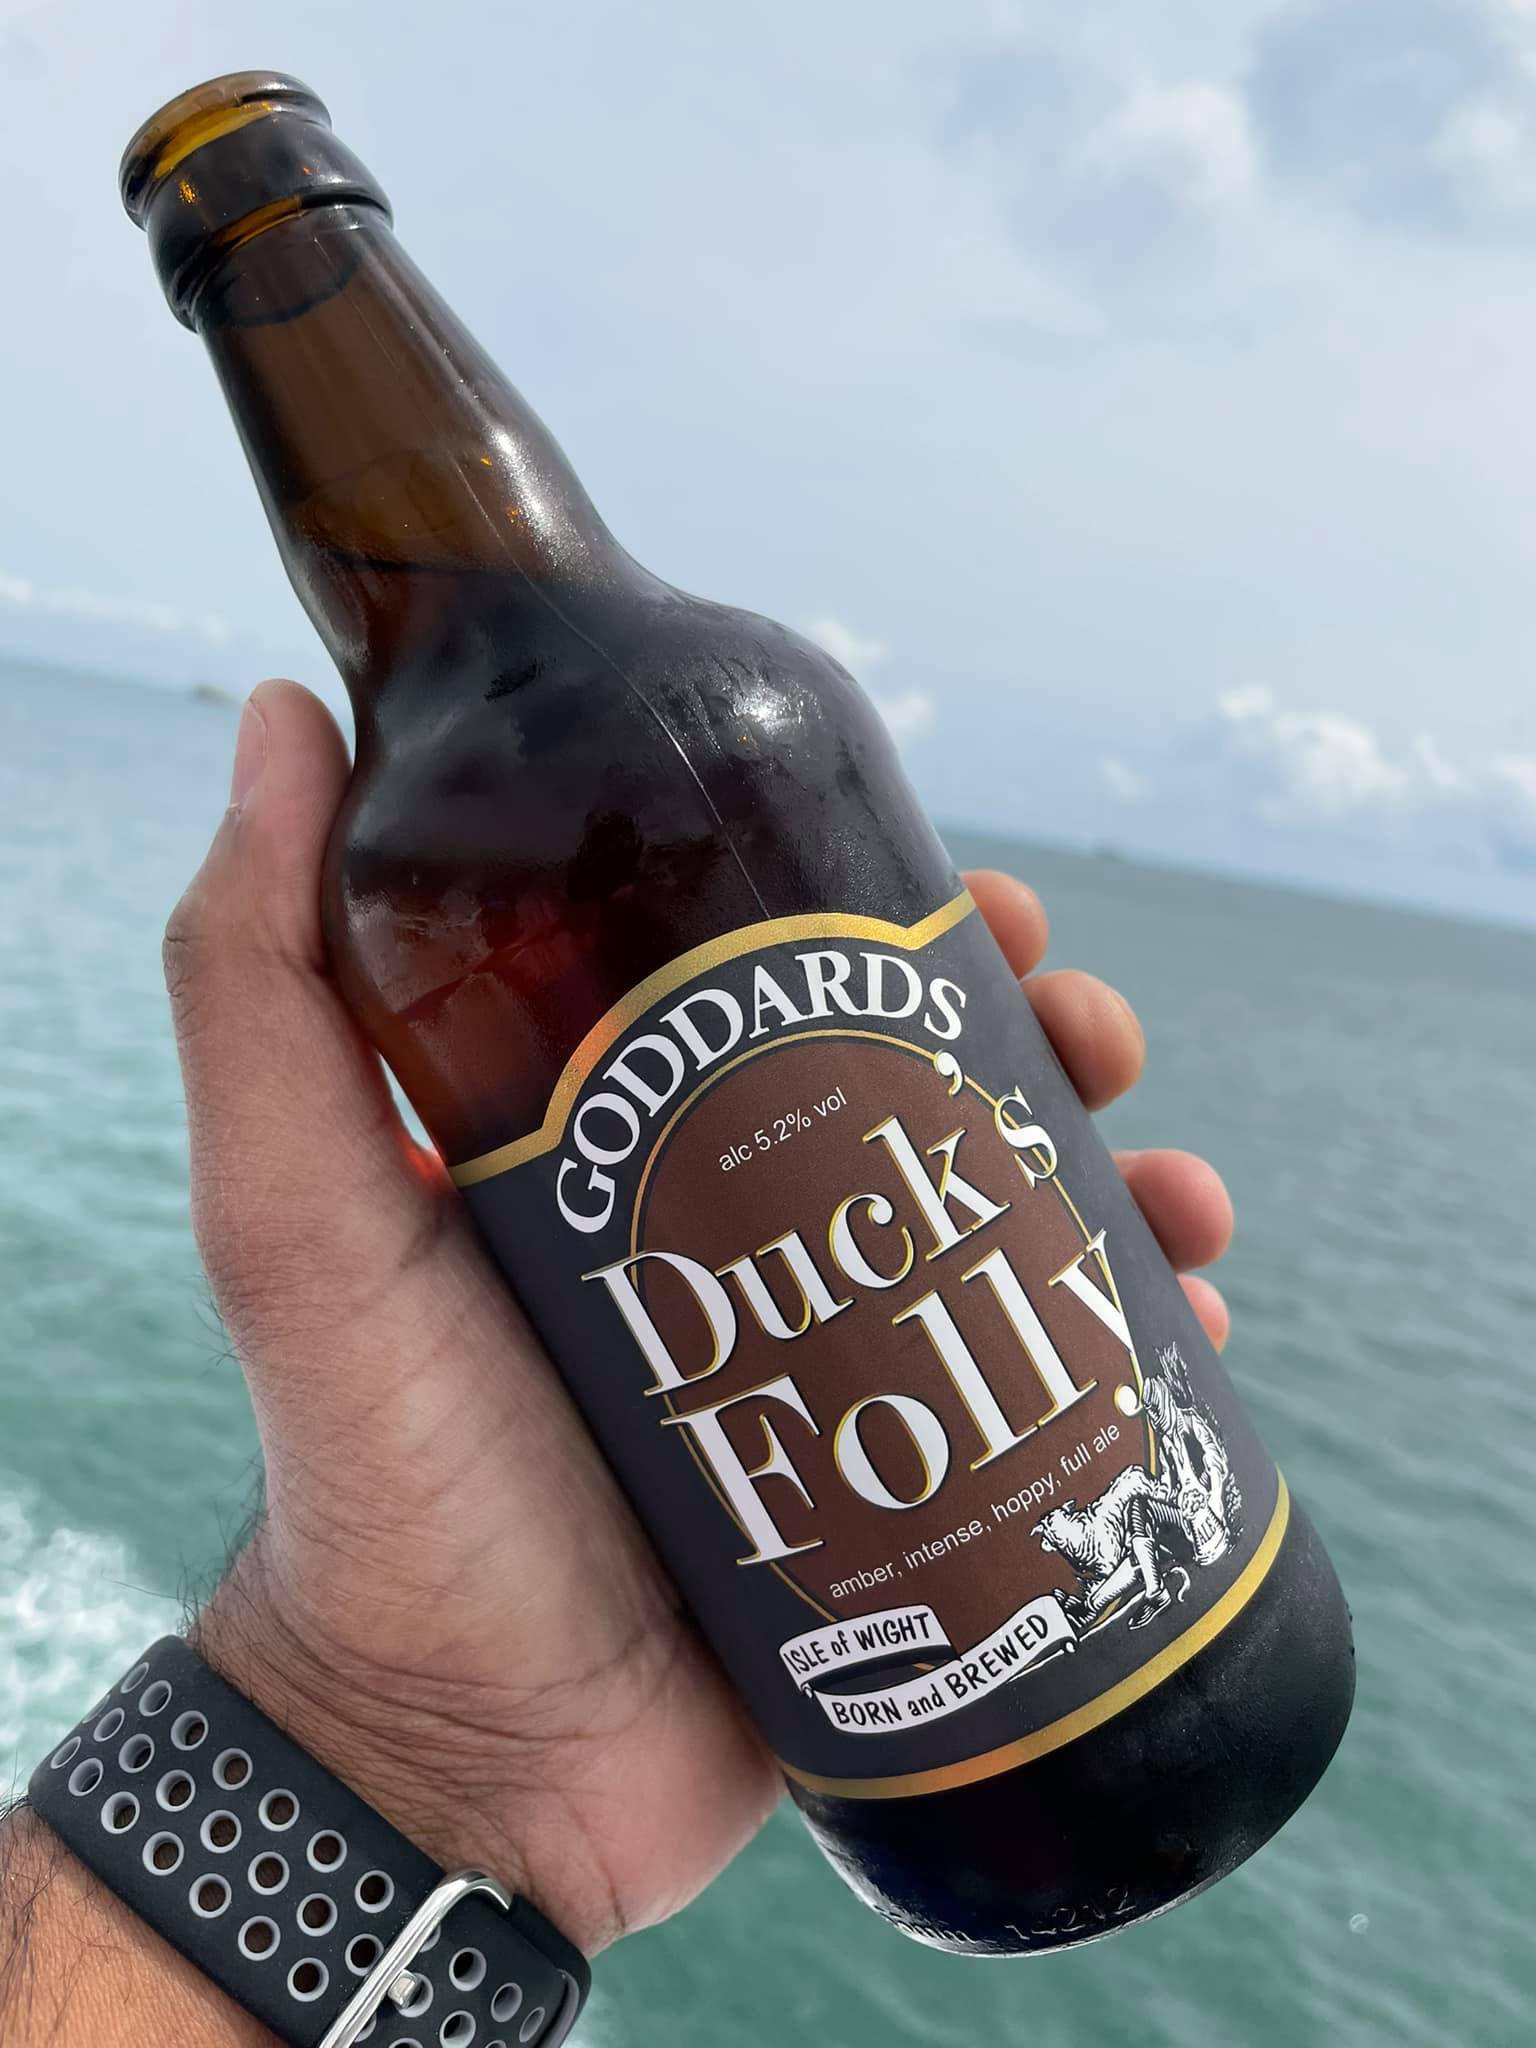 Goddard’s Duck’s Folly
